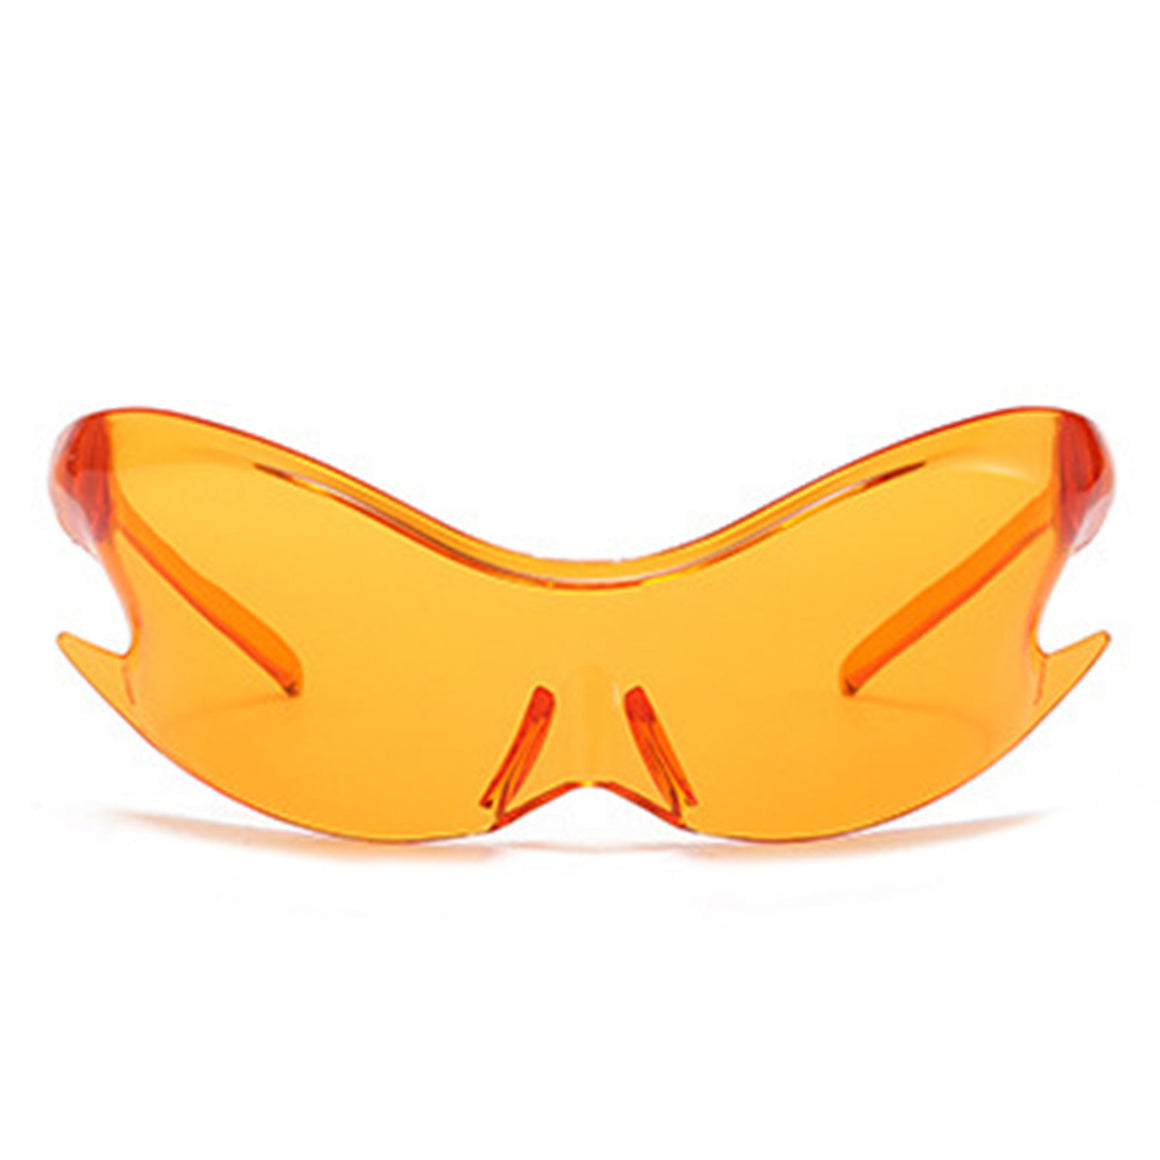 Whiestan - Futuristic Mirrored Sleek Wrap Around Sports Sunglasses Orange